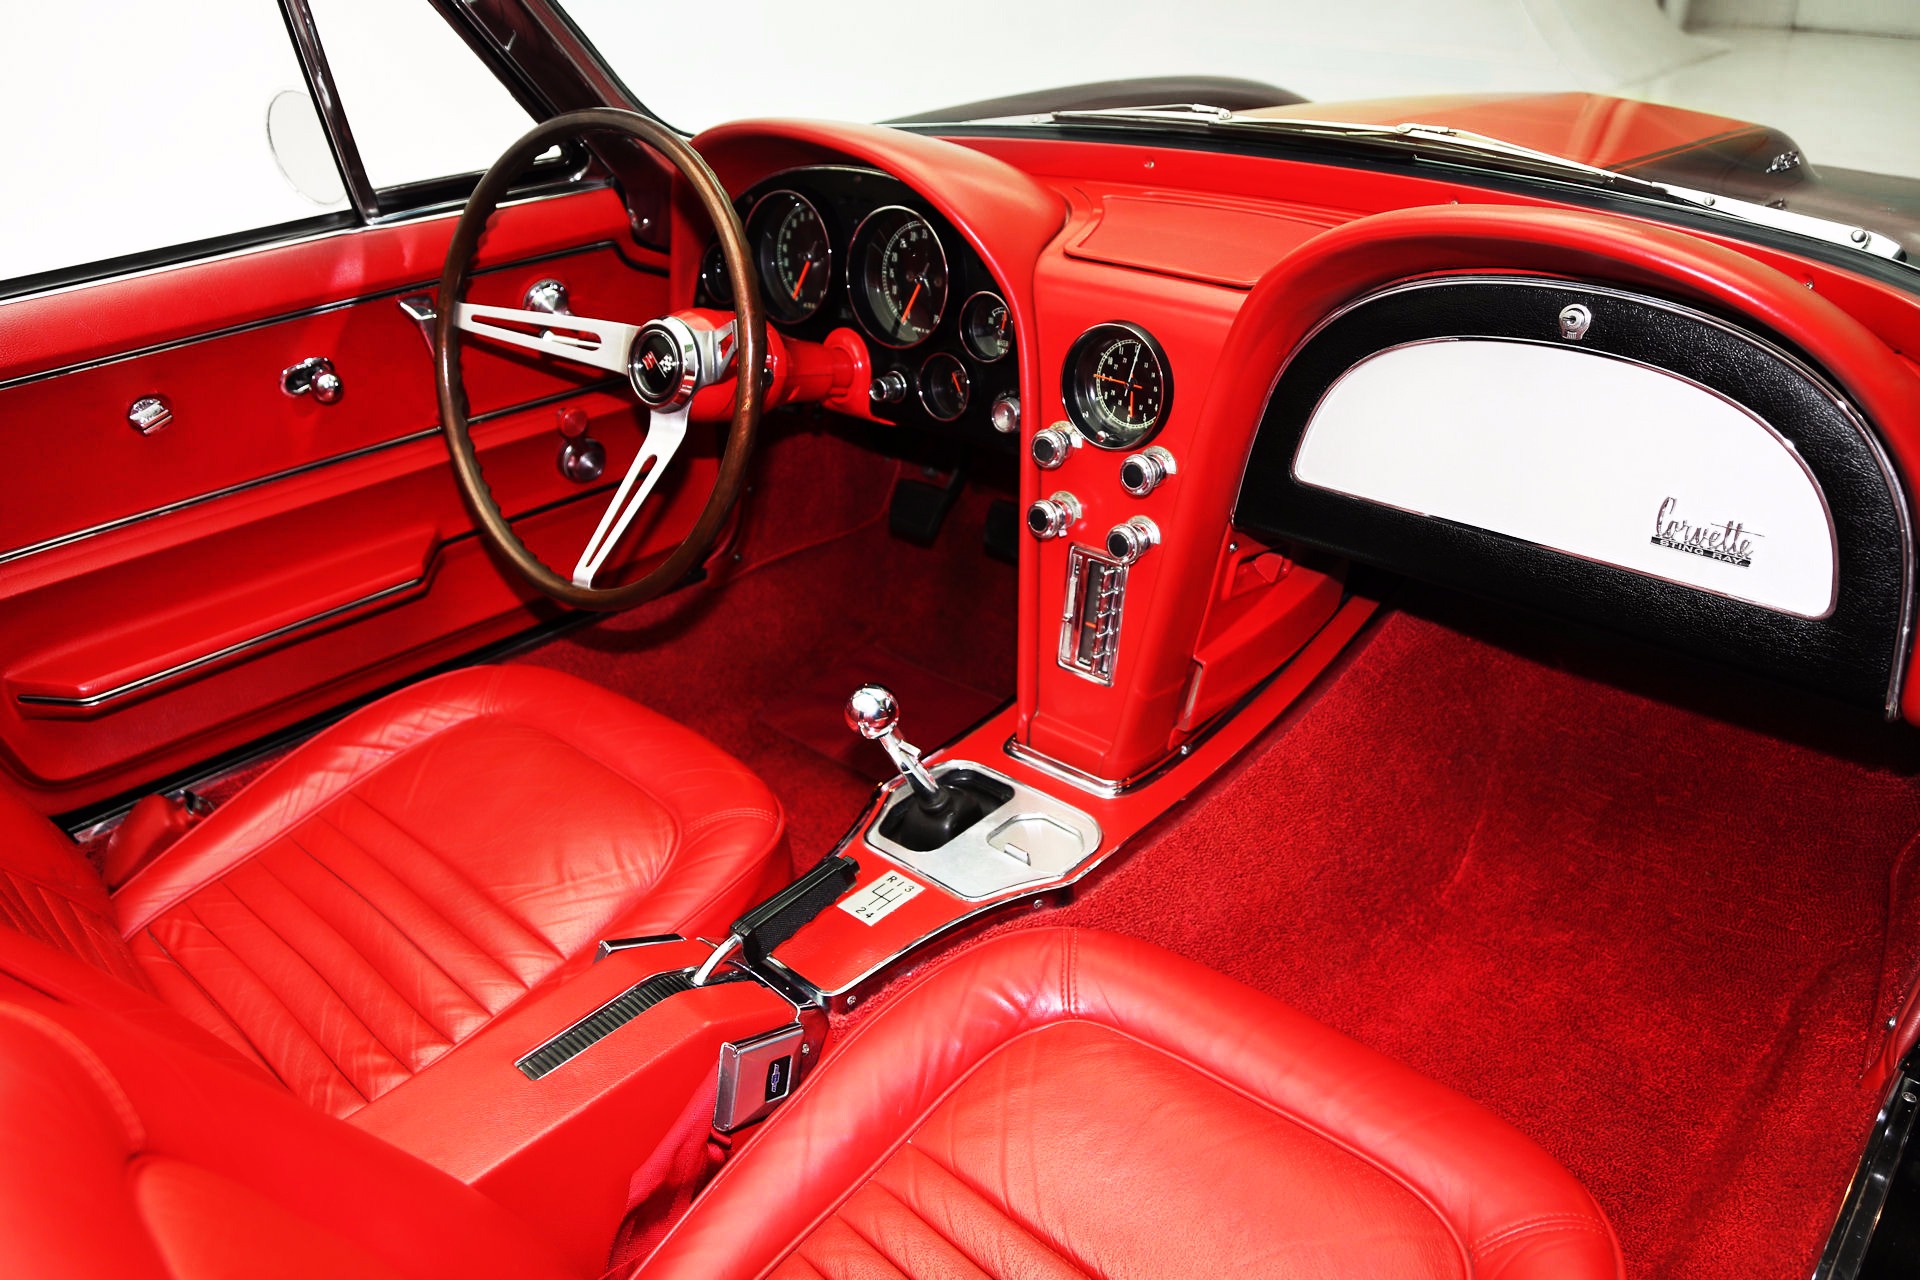 a 1967 Chevrolet Corvette